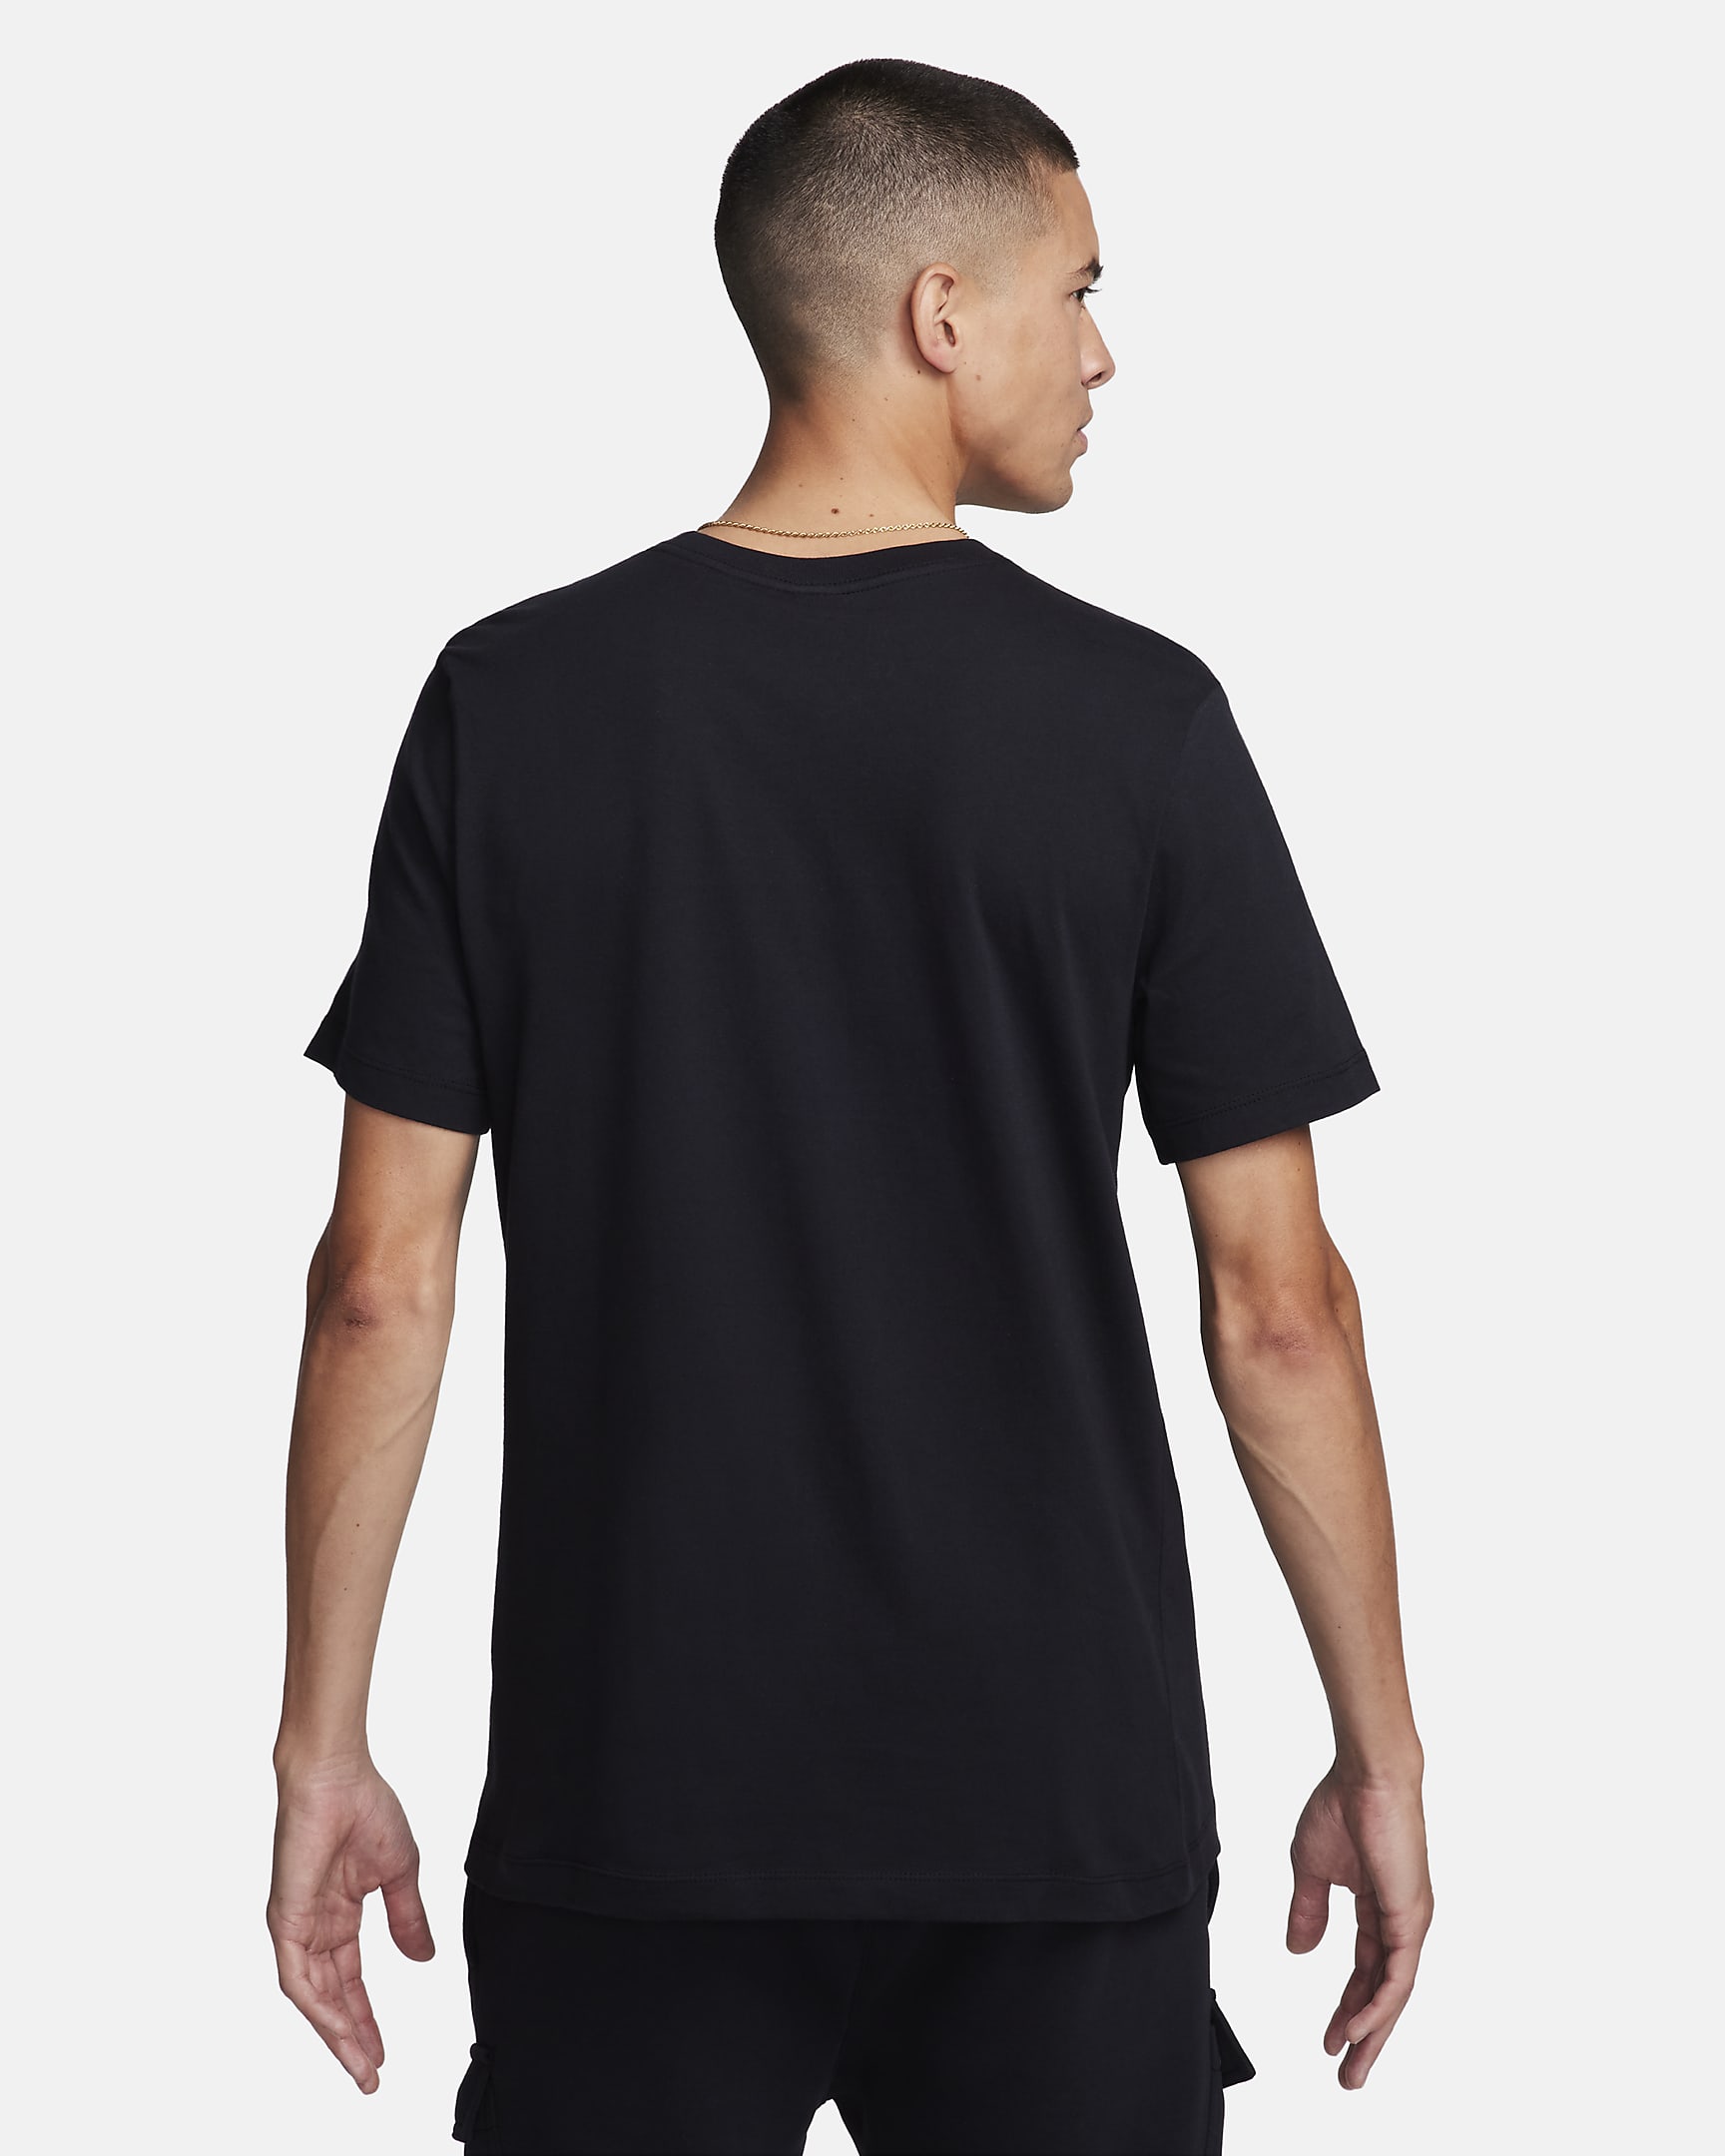 Nike Sportswear Men's Graphic T-Shirt. Nike SK